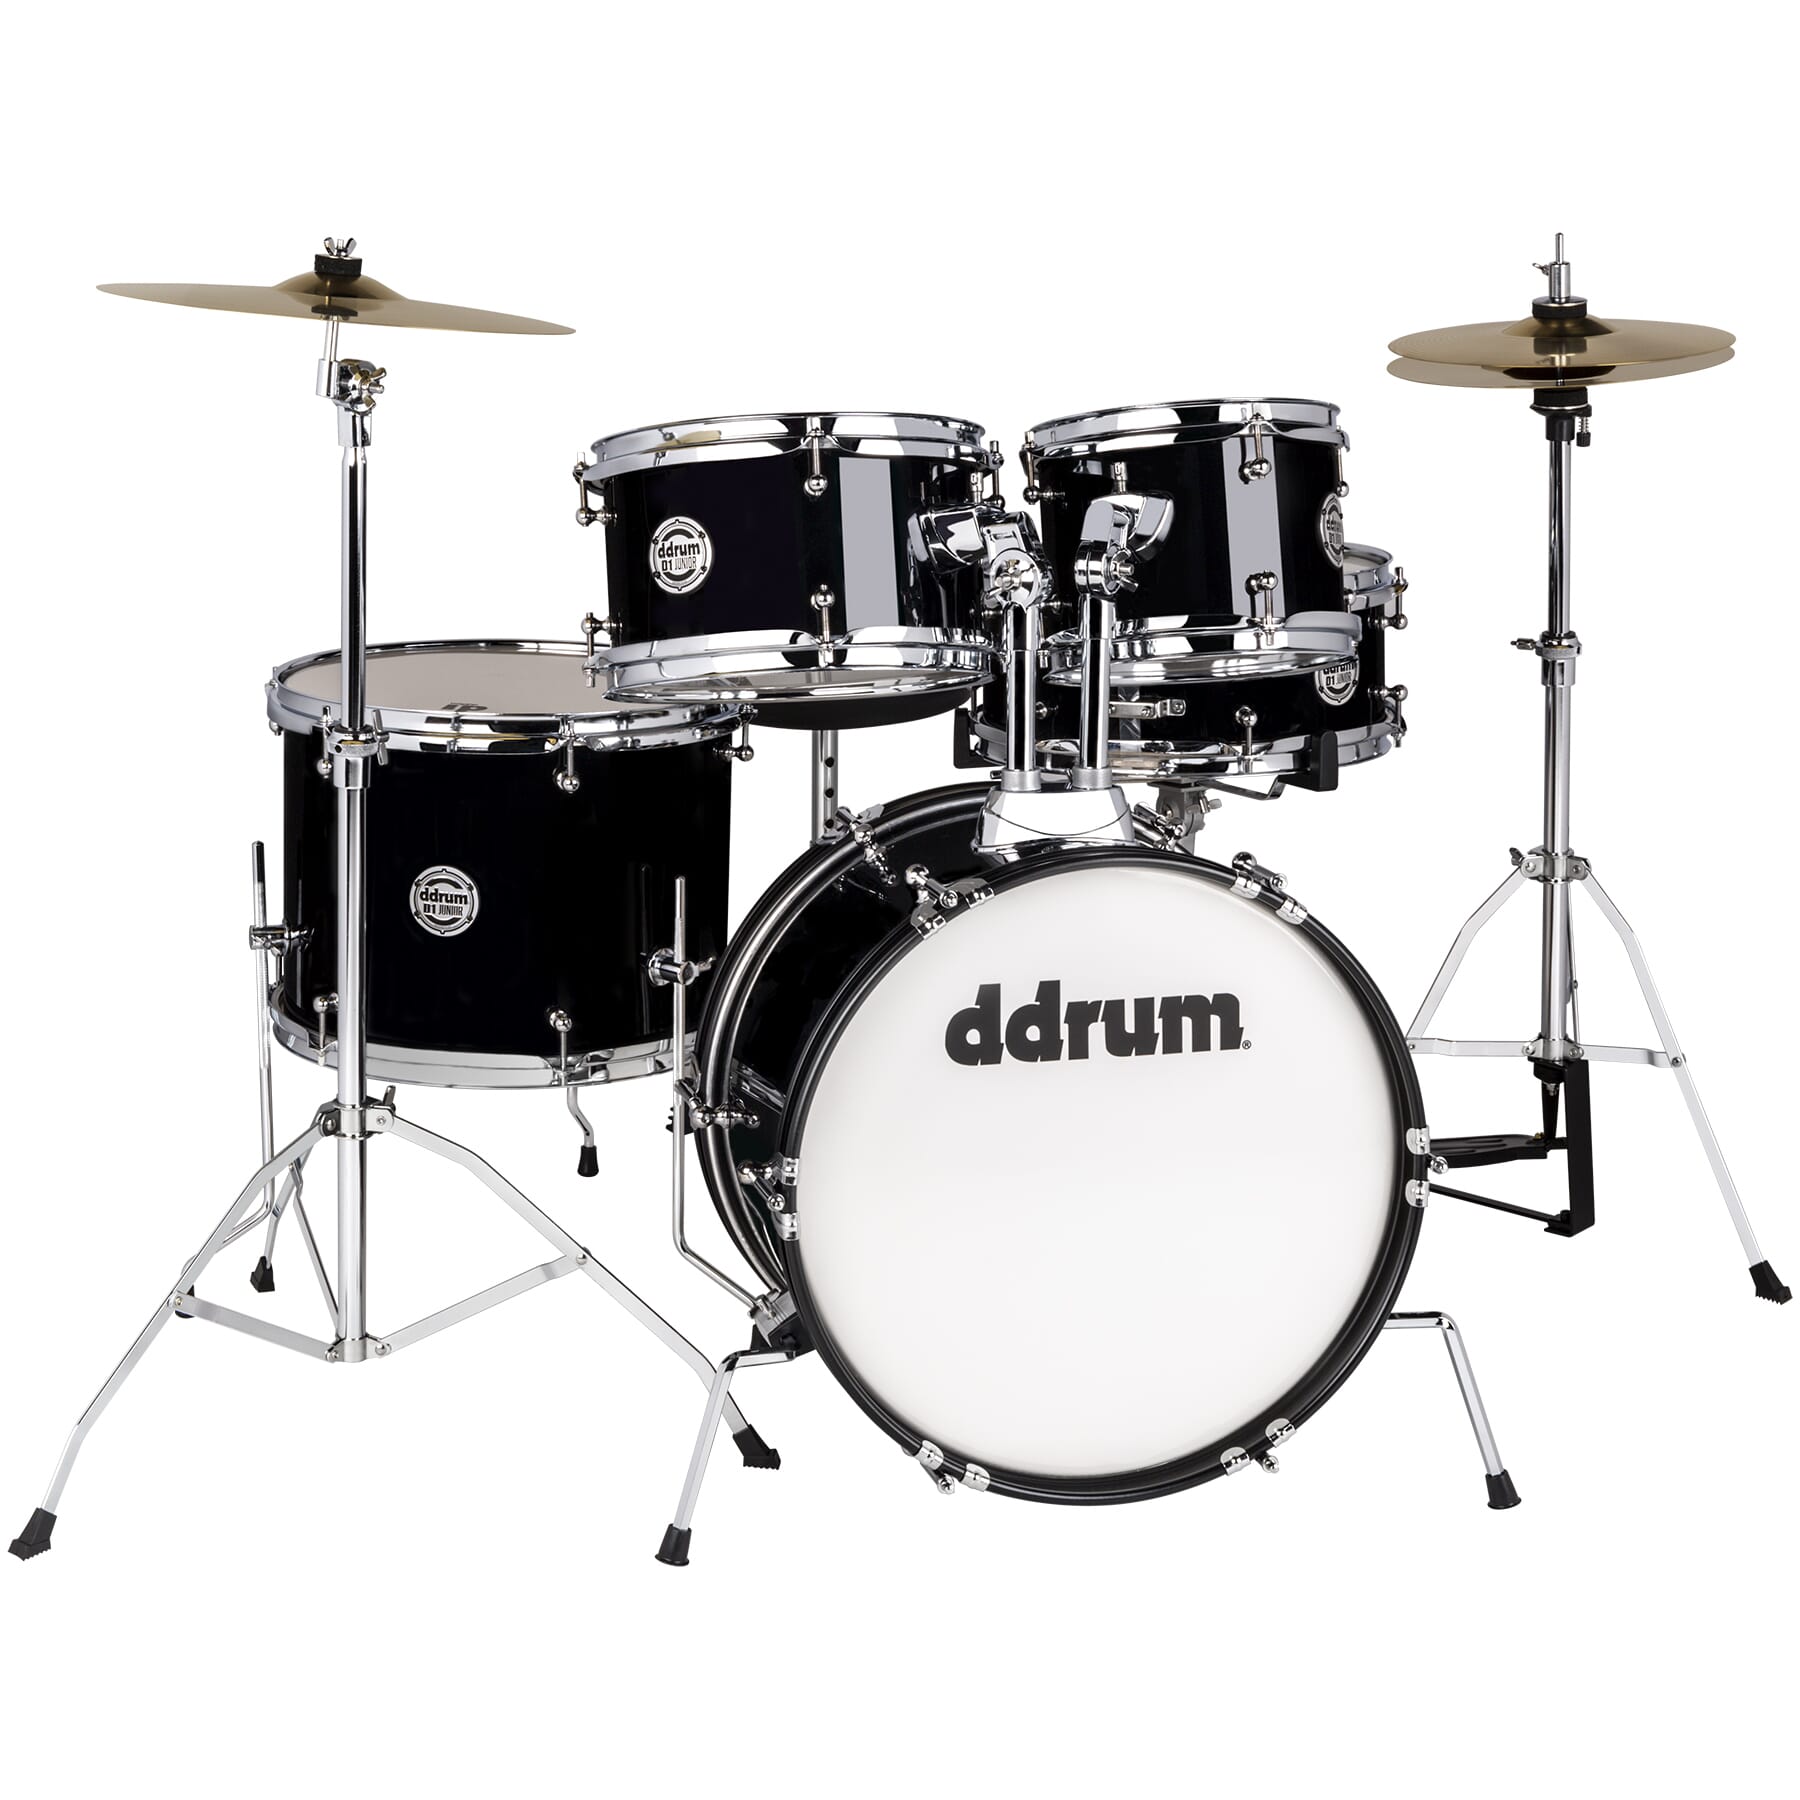 D1 Junior  Midnight black Complete drum set with cymbals